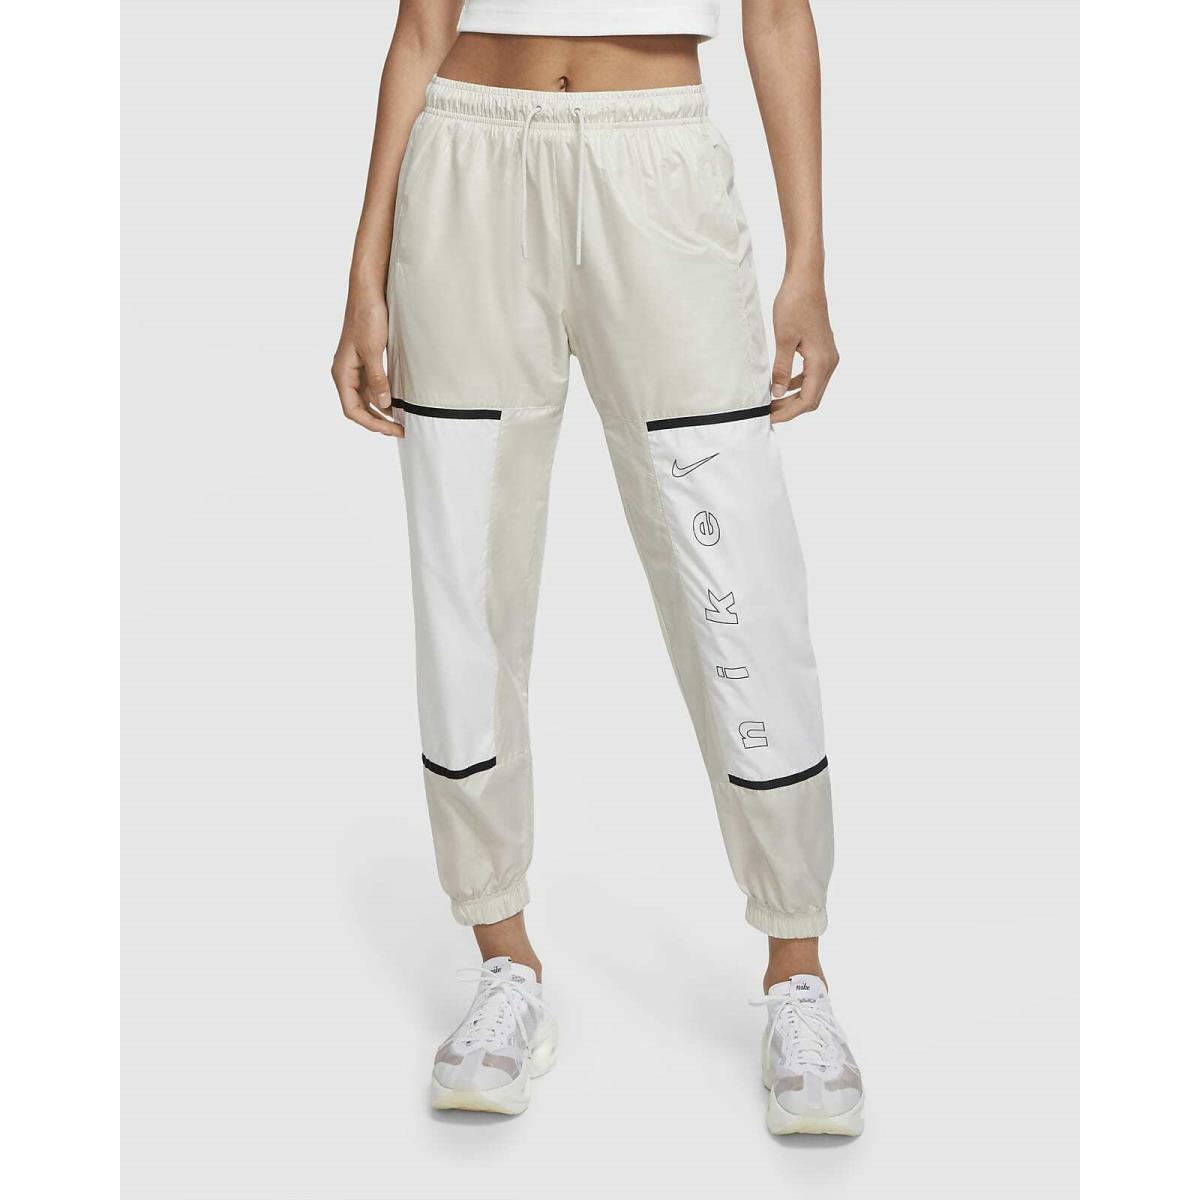 Nike Sportswear Woven Pants Size S Light Bone White Joggers CU6395 072